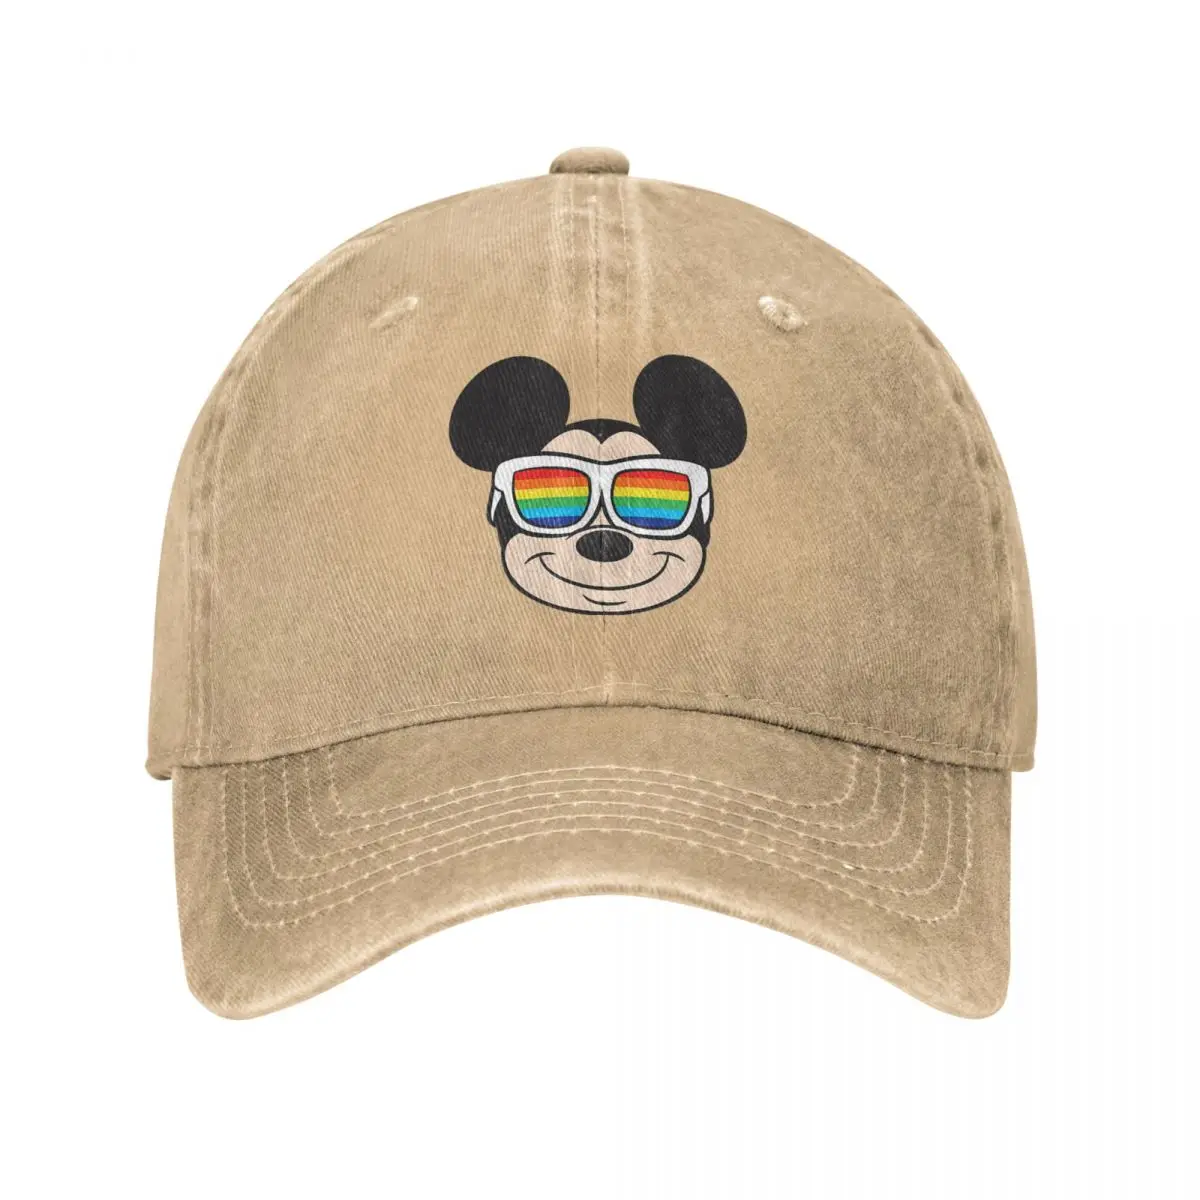 

Disney Mickey Mouse Baseball Cap Vintage Distressed Denim Washed Rainbow Sunglasses Snapback Cap Unisex Outdoor Running Golf Hat